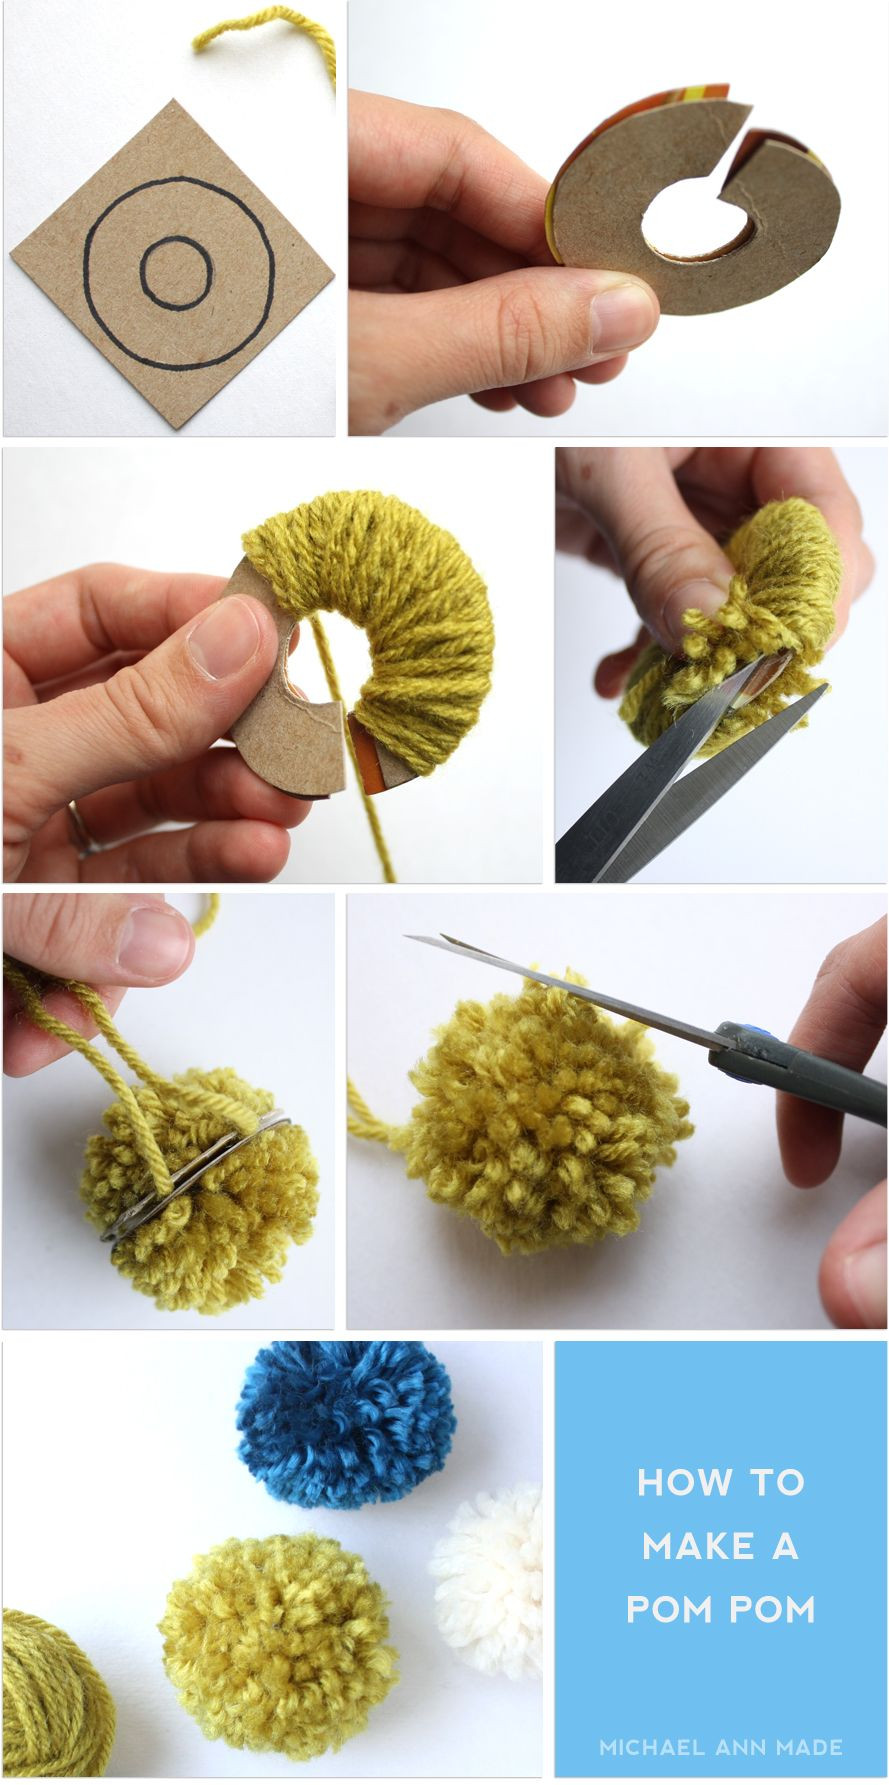 Best ideas about DIY Pom Pom Maker
. Save or Pin how to make a pom pom Great tutorial for yarn pom poms Now.